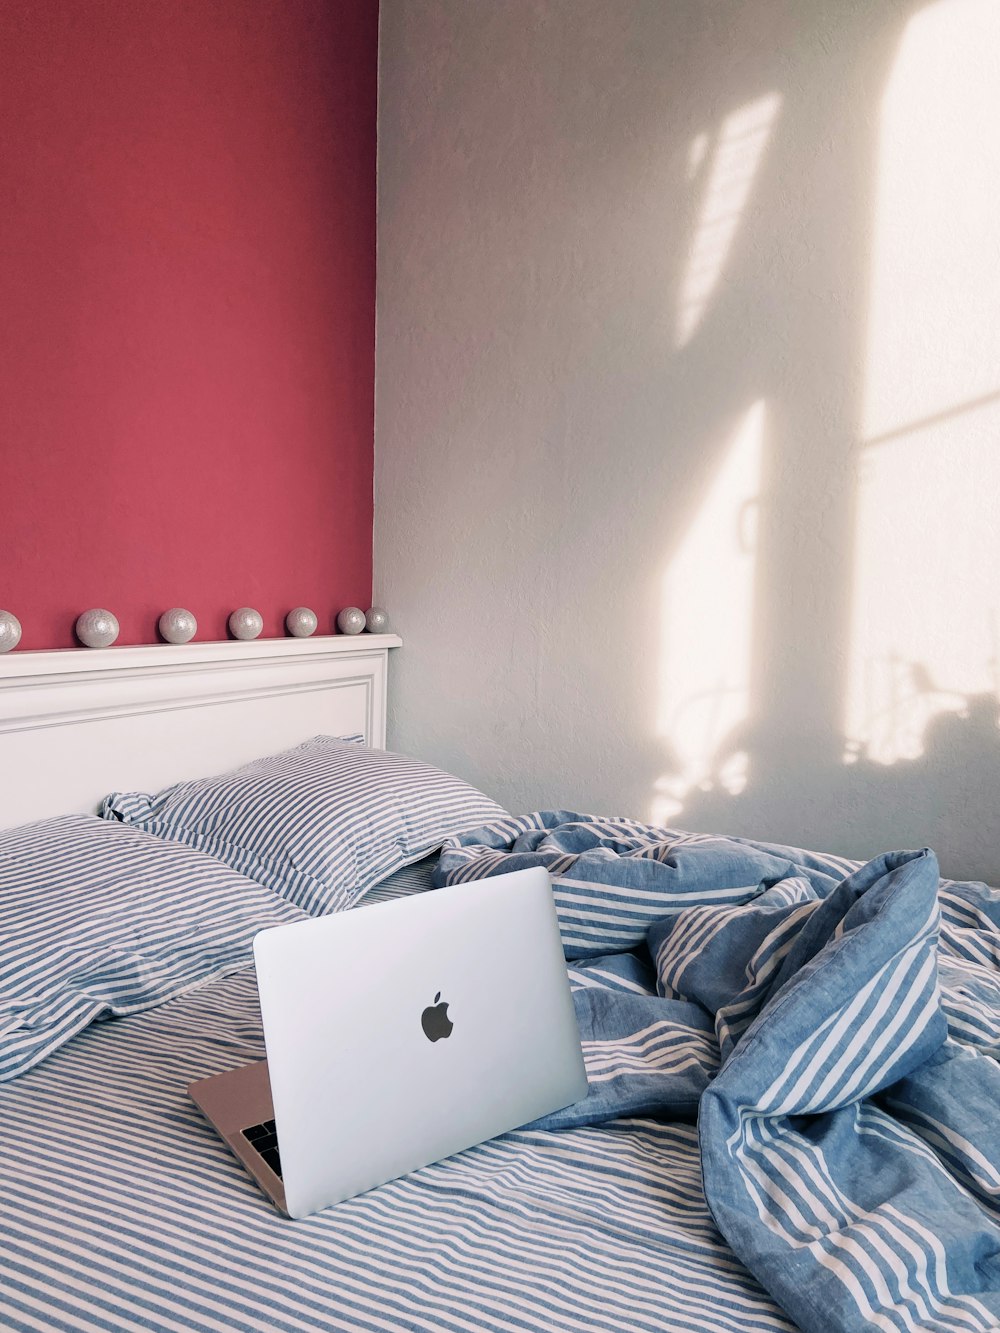 macbook prata na roupa de cama azul e branca